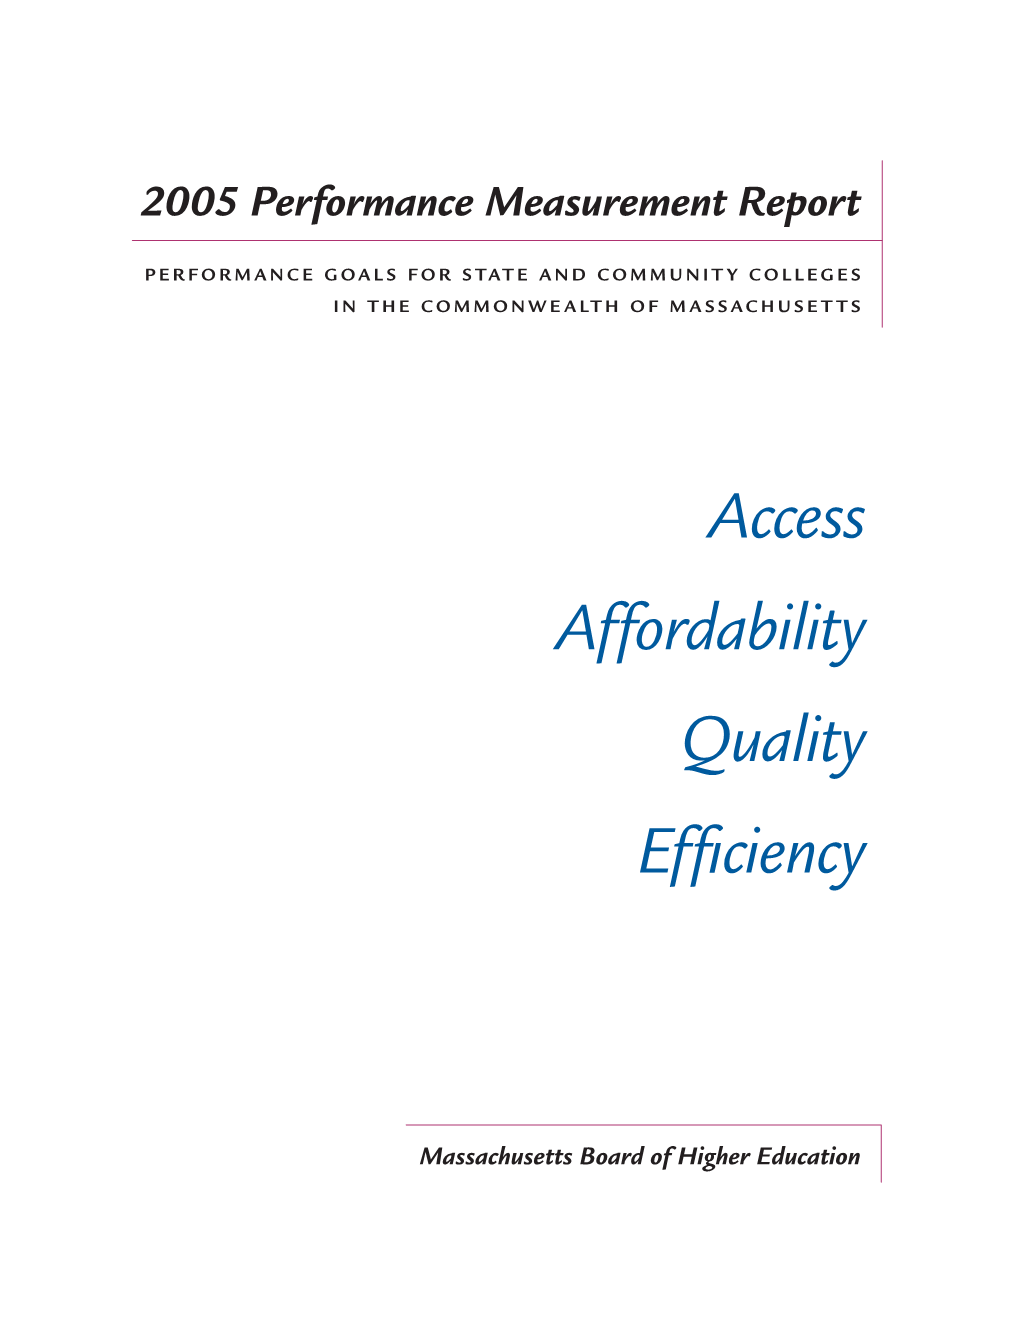 Access Affordability Quality Efficiency